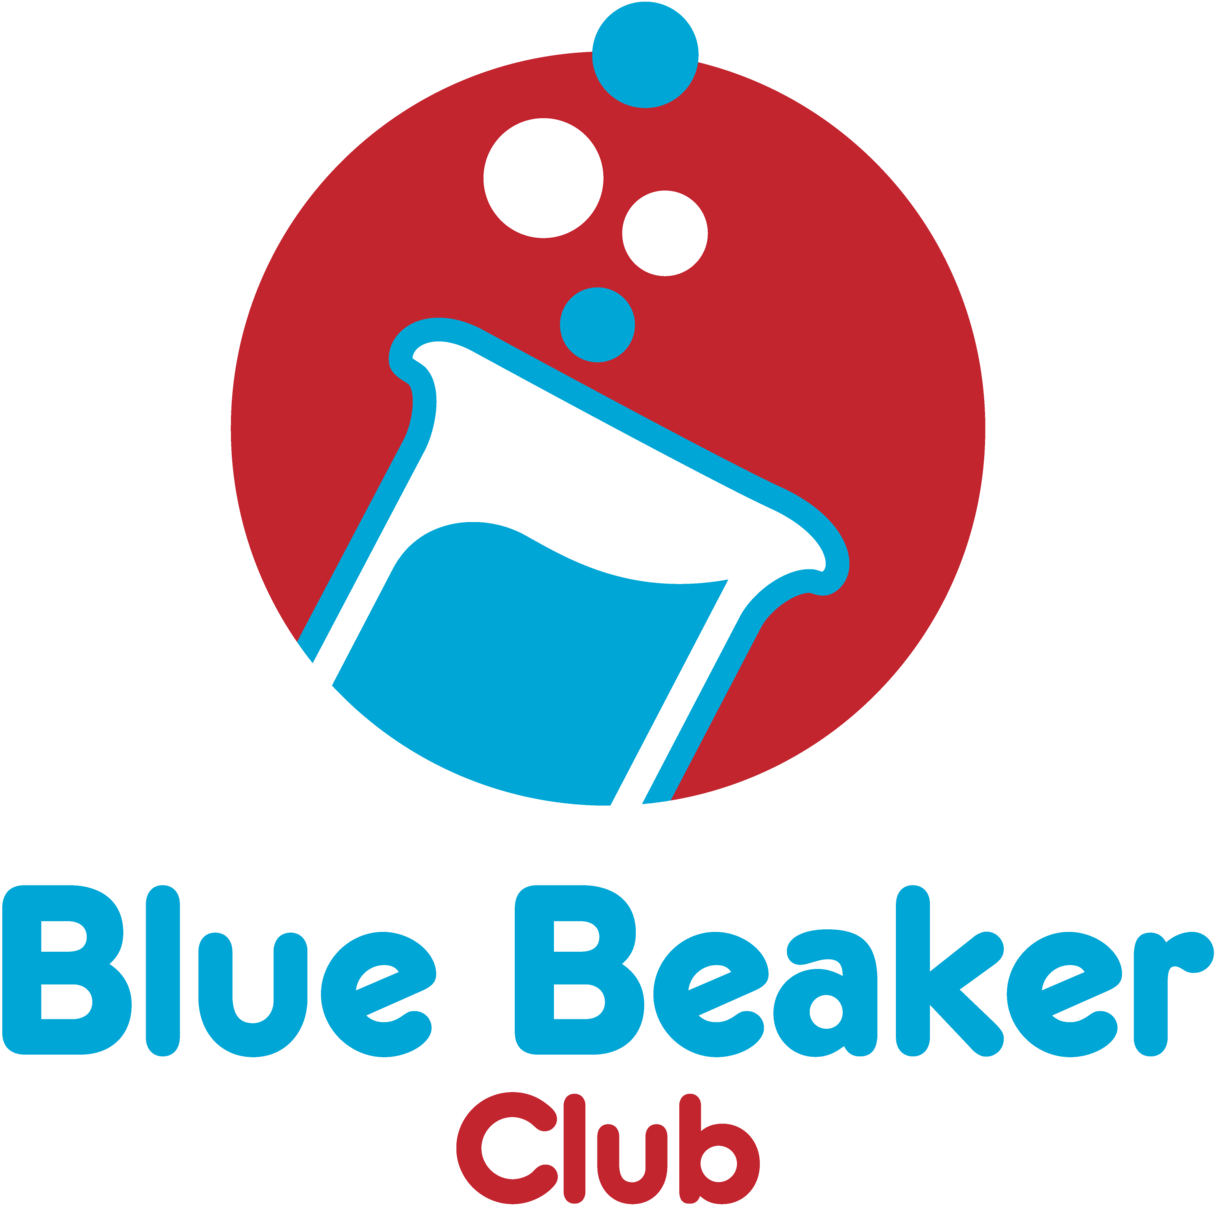 Blue Beaker Club Logo PNG